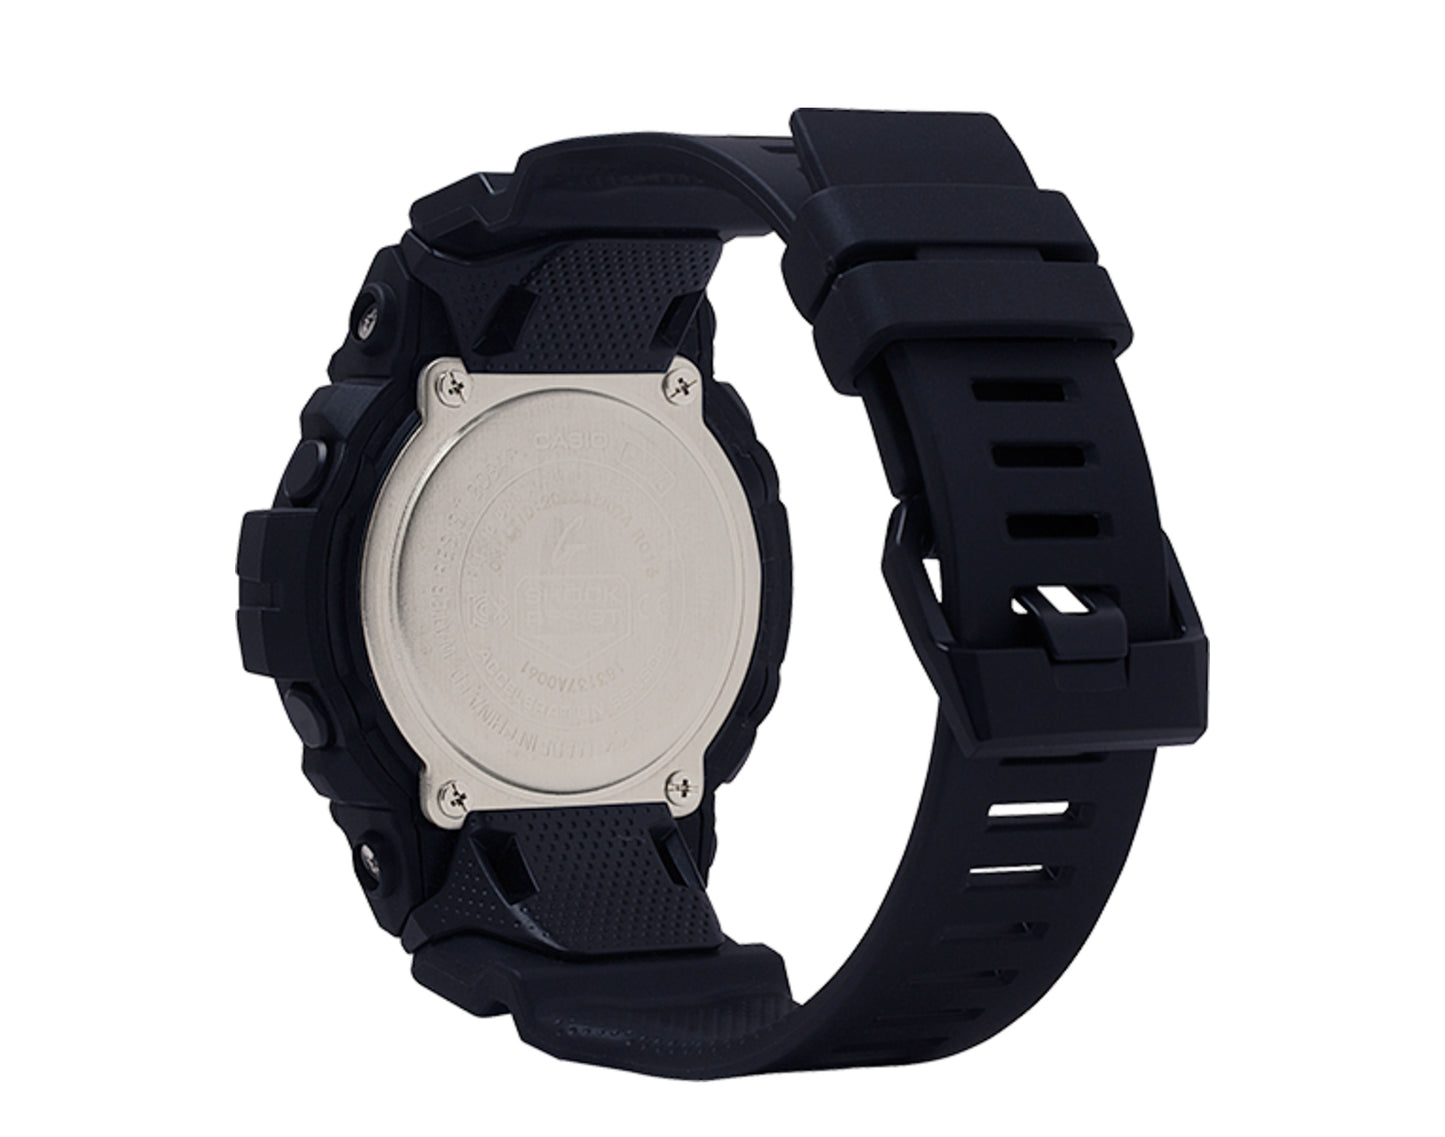 Casio G-Shock GBD800 Digital Resin Bluetooth Men's Watch